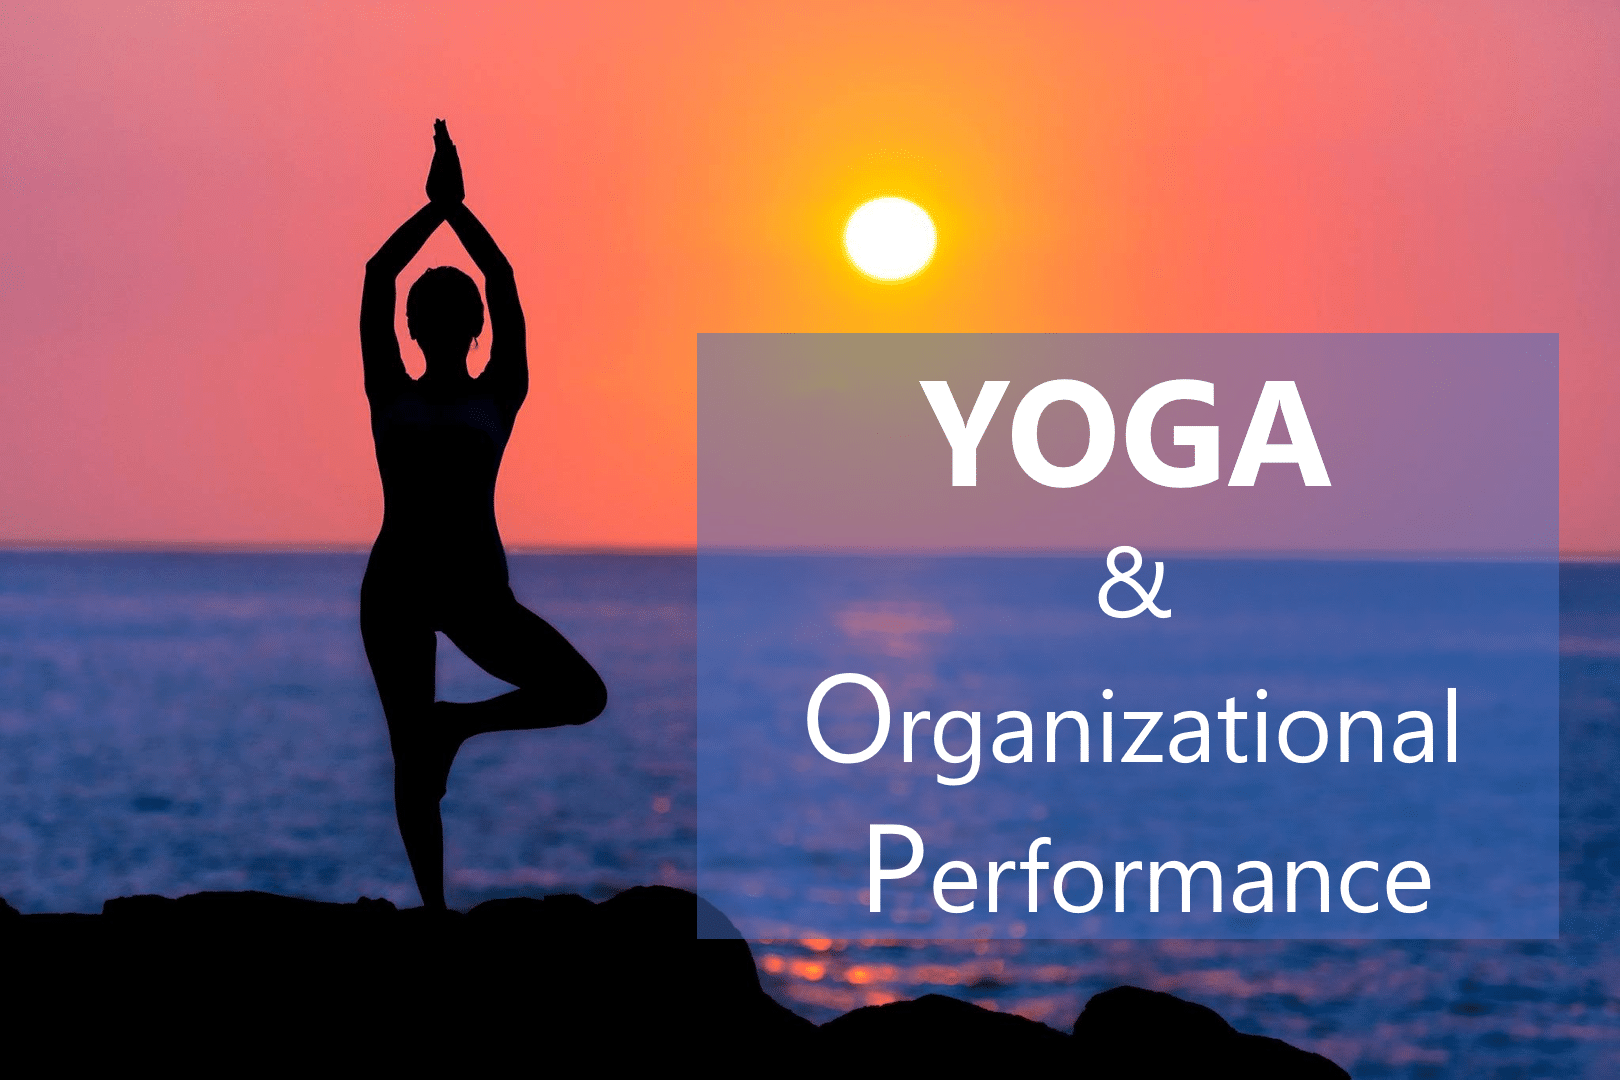 Yoga and Organizational Performance